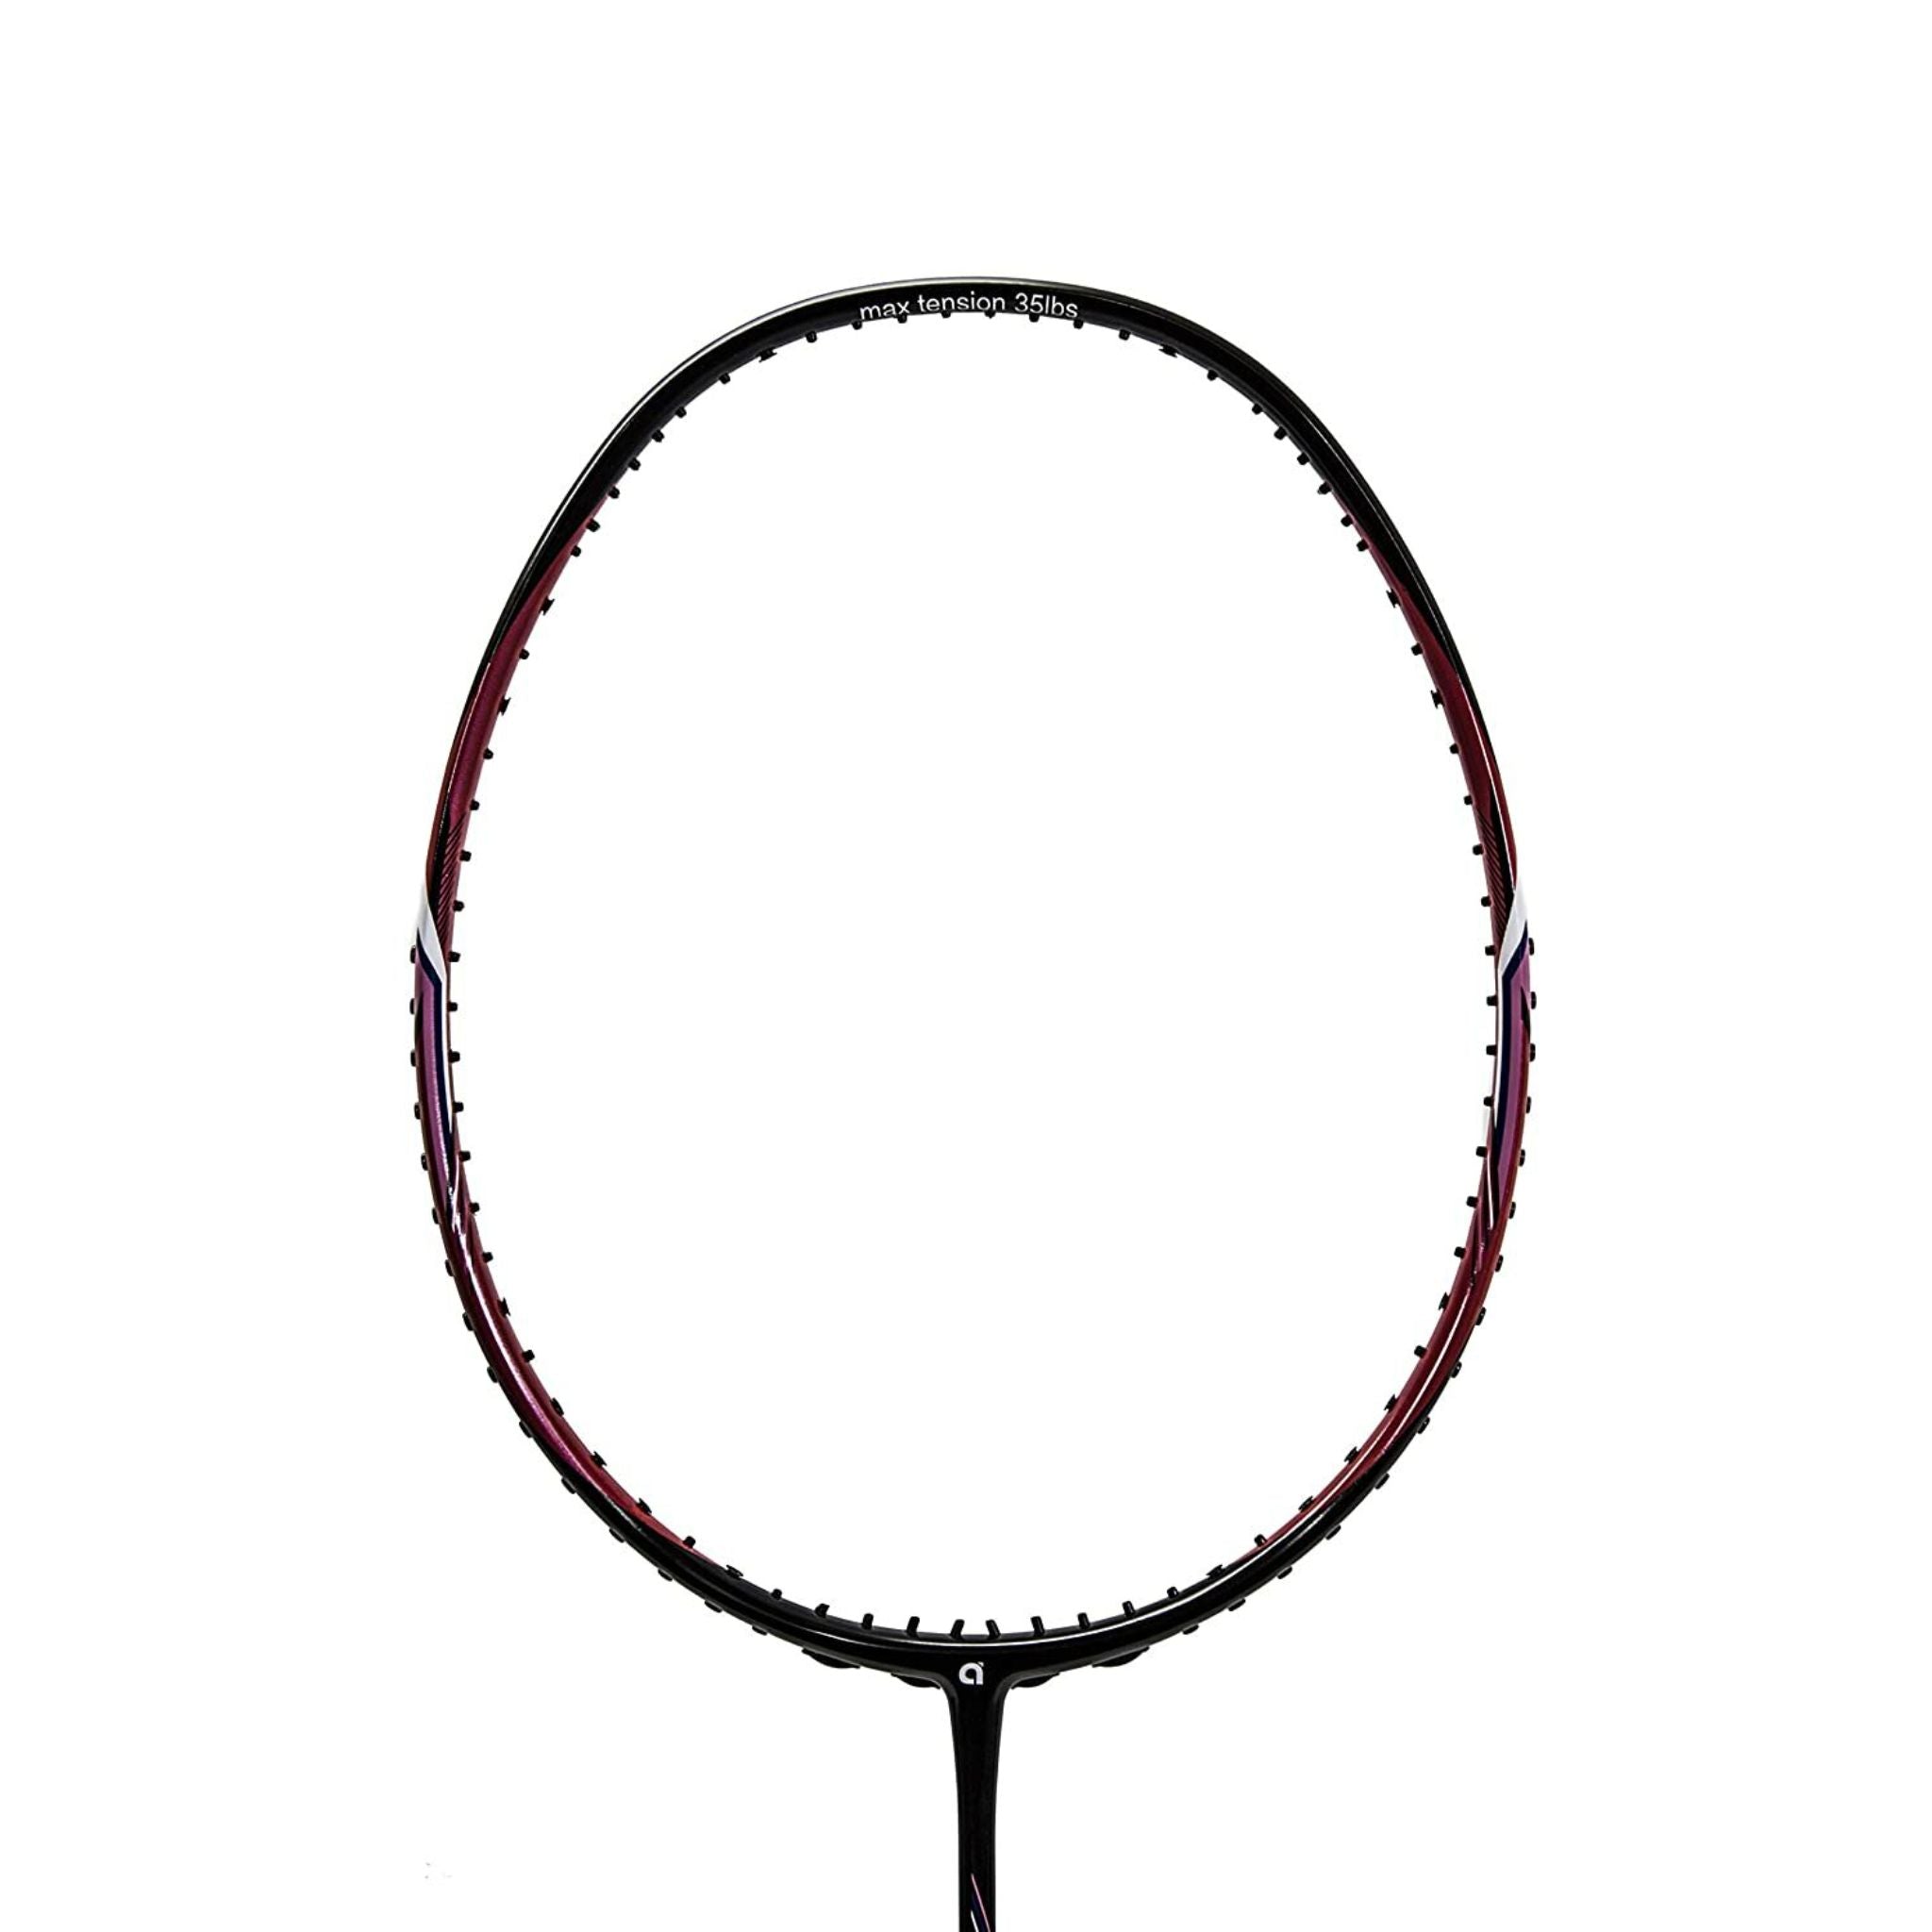 Apacs Accurate 77 Badminton Racket